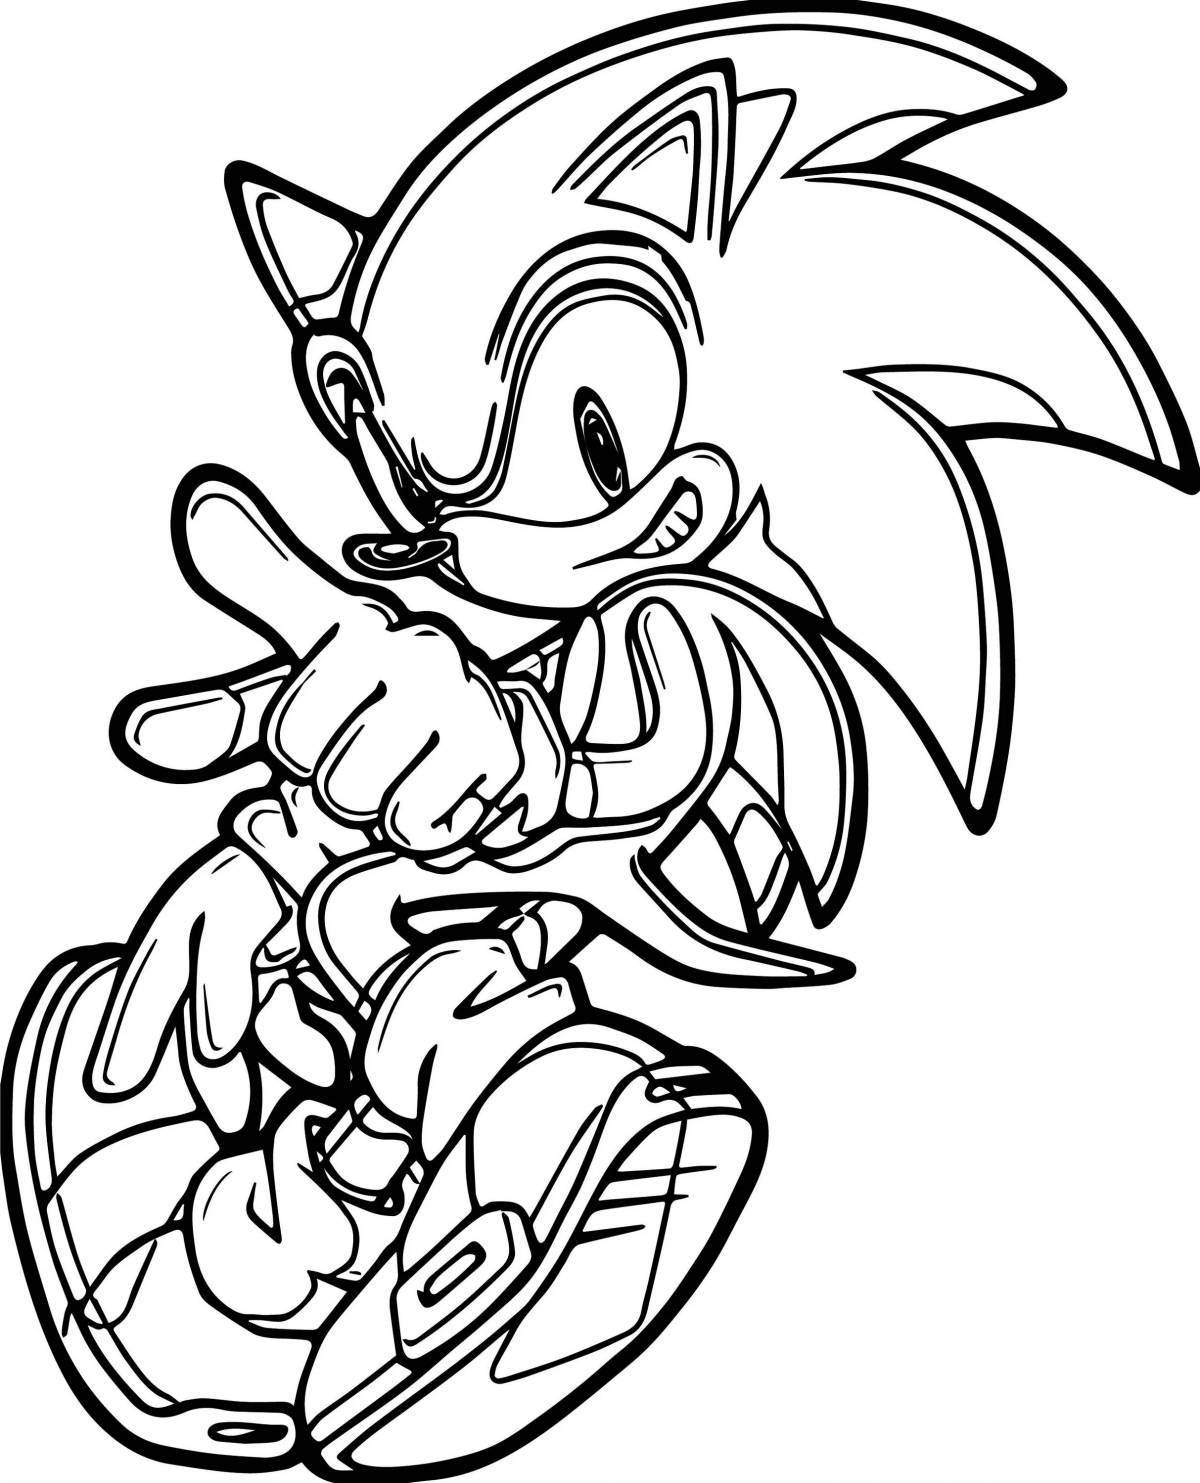 Sonic shader #2